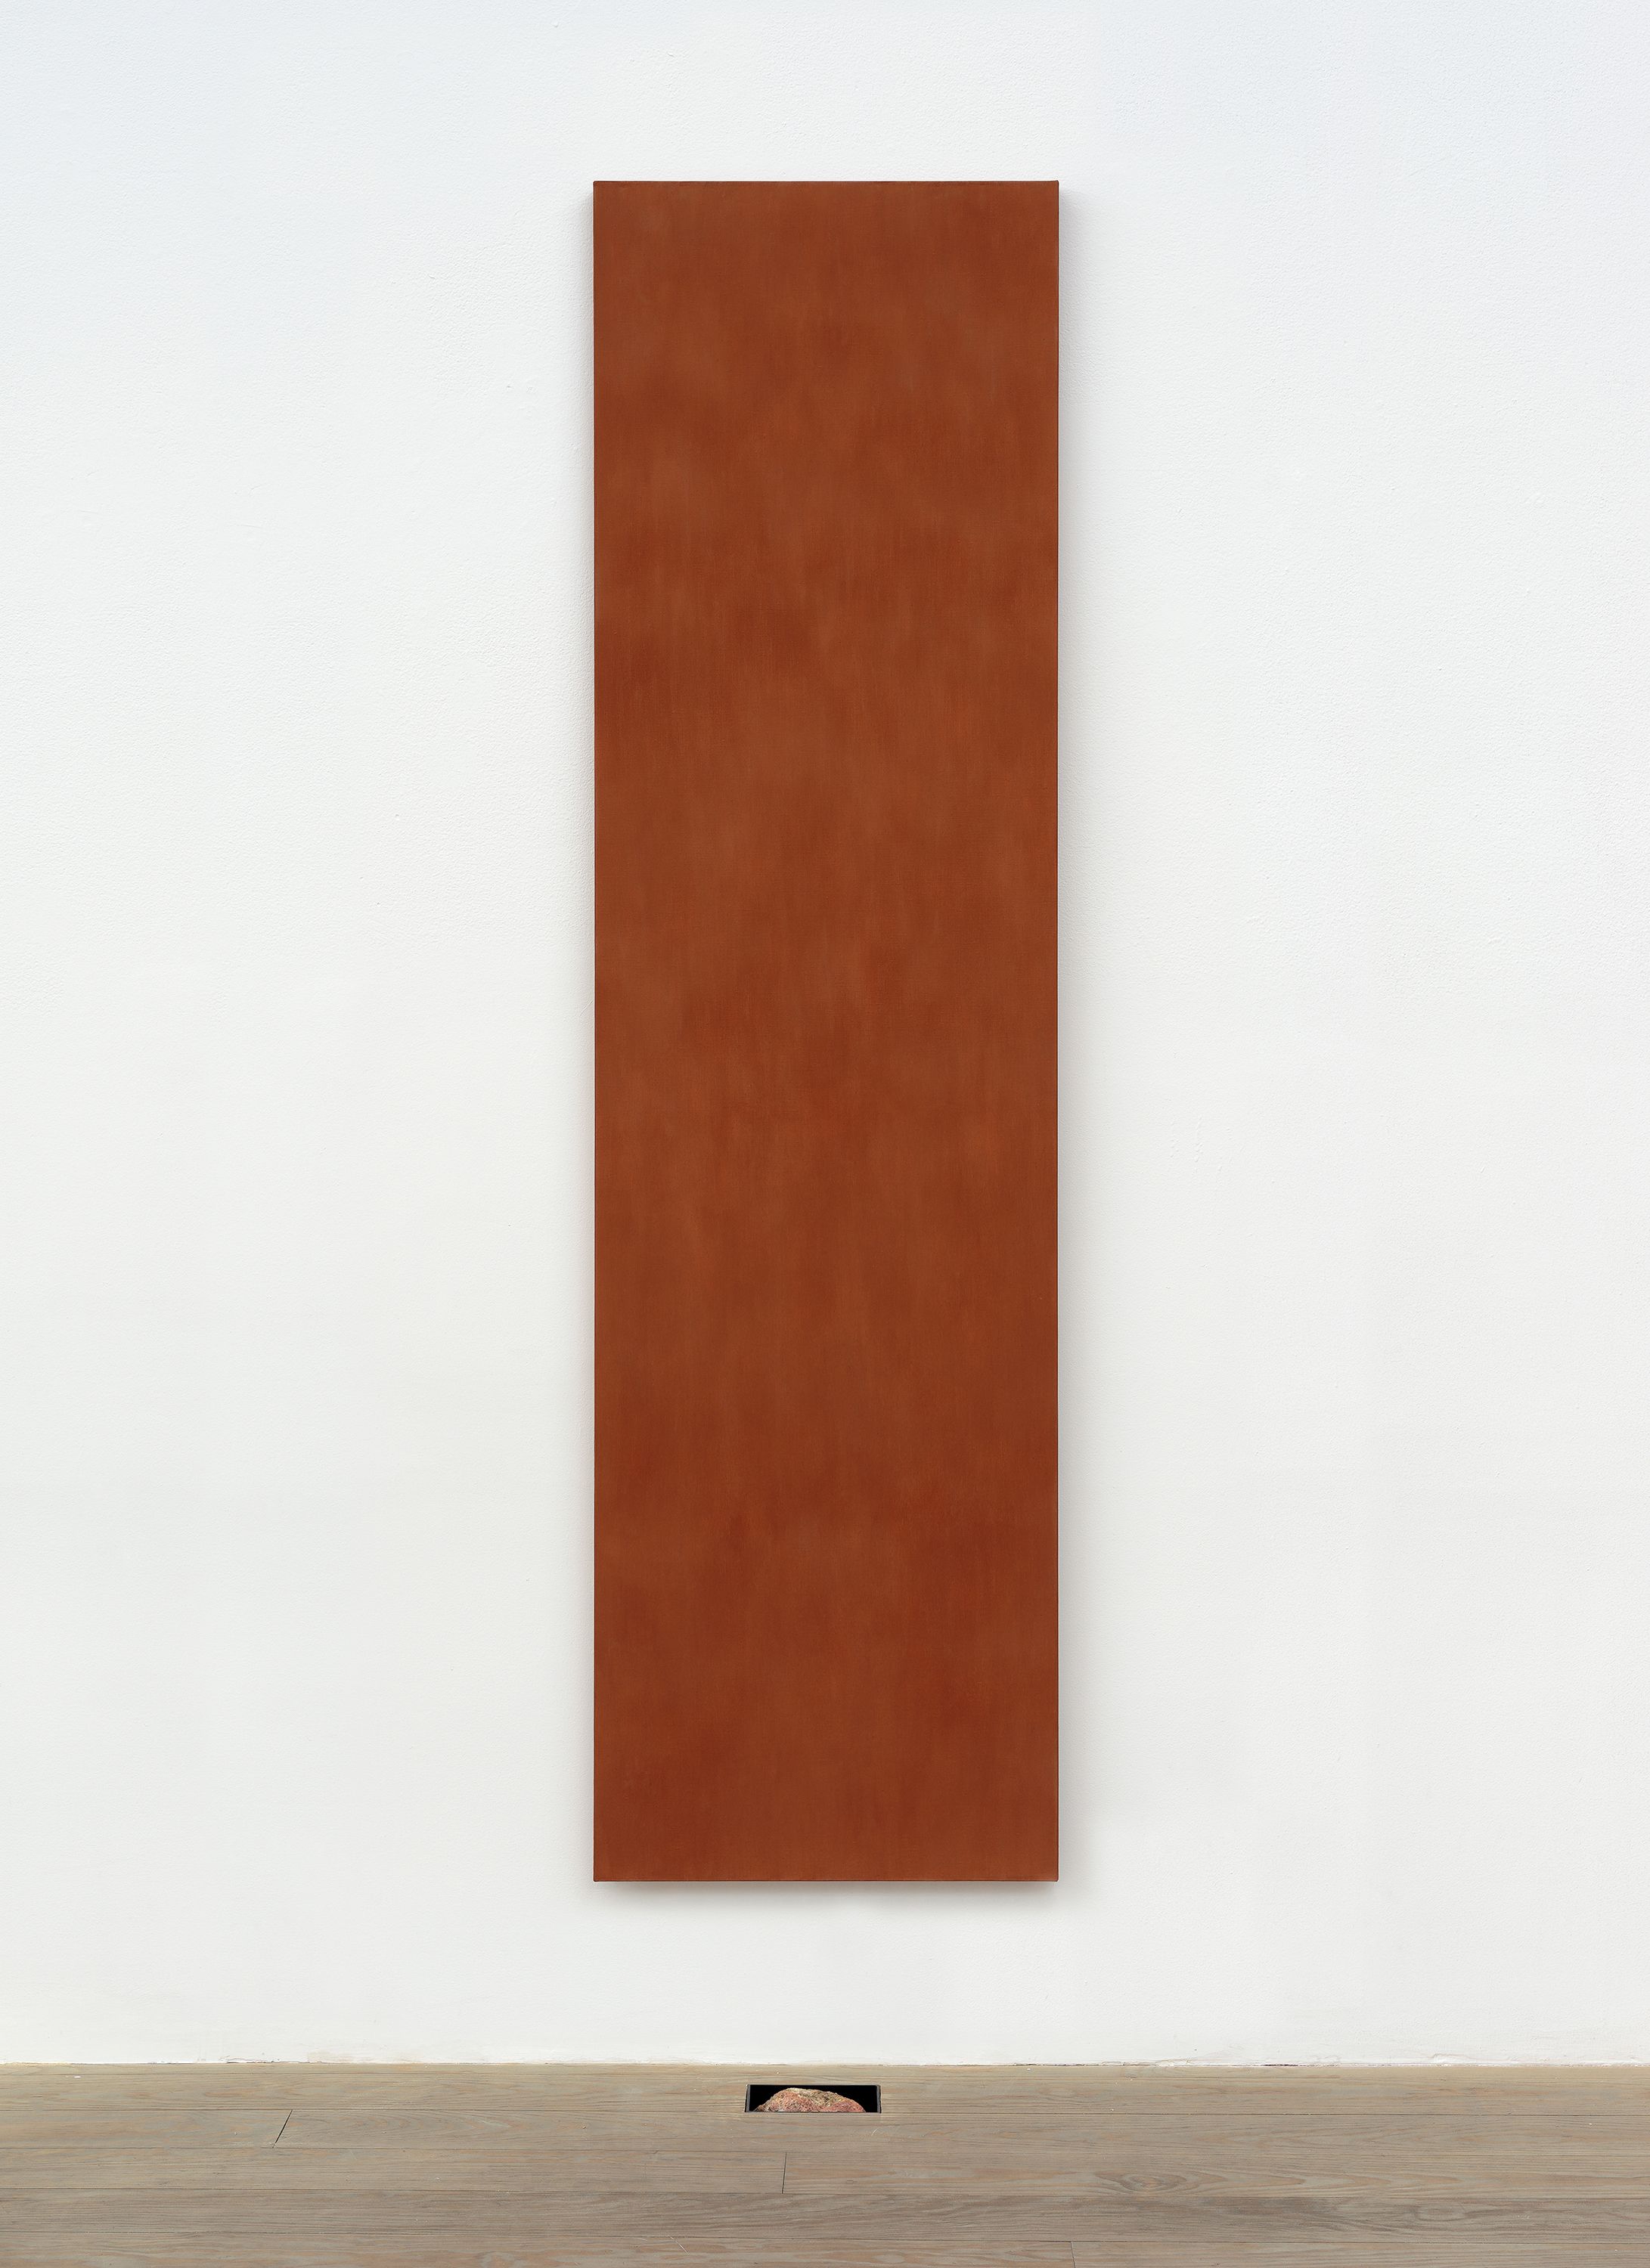 Michael Wang, Hong Kong, 2015, Hong Kong sandstone, binder, linen, 70 x 19 and 5 3/16 x 3 5/8 x 2 3/8 in.